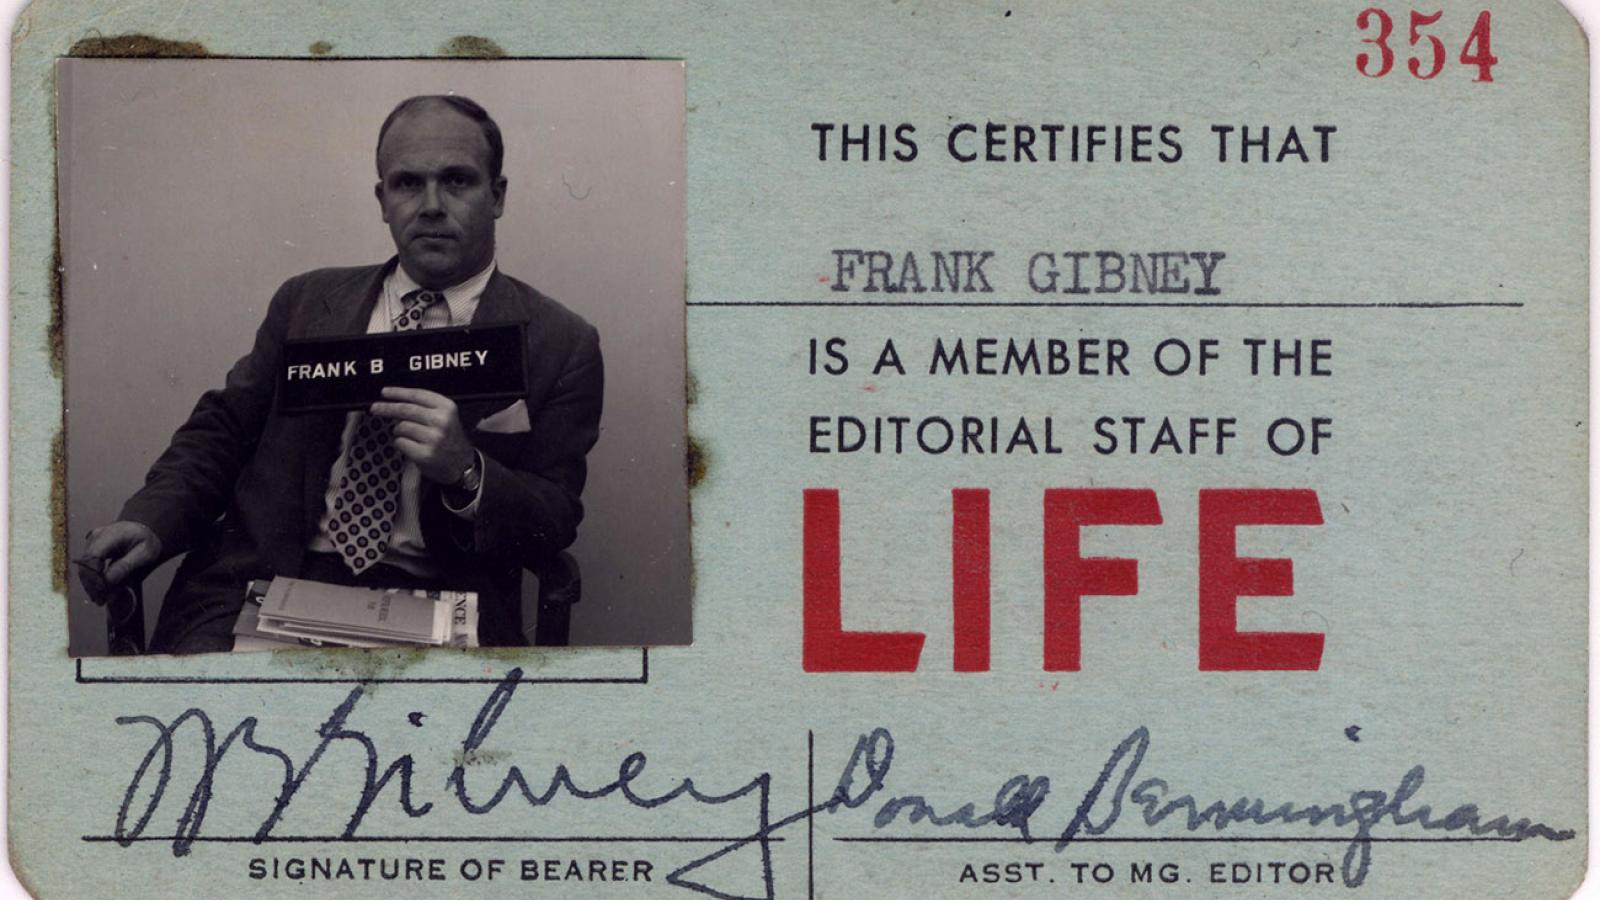 LIFE magazine identification card of Frank Gibney, circa 1955.